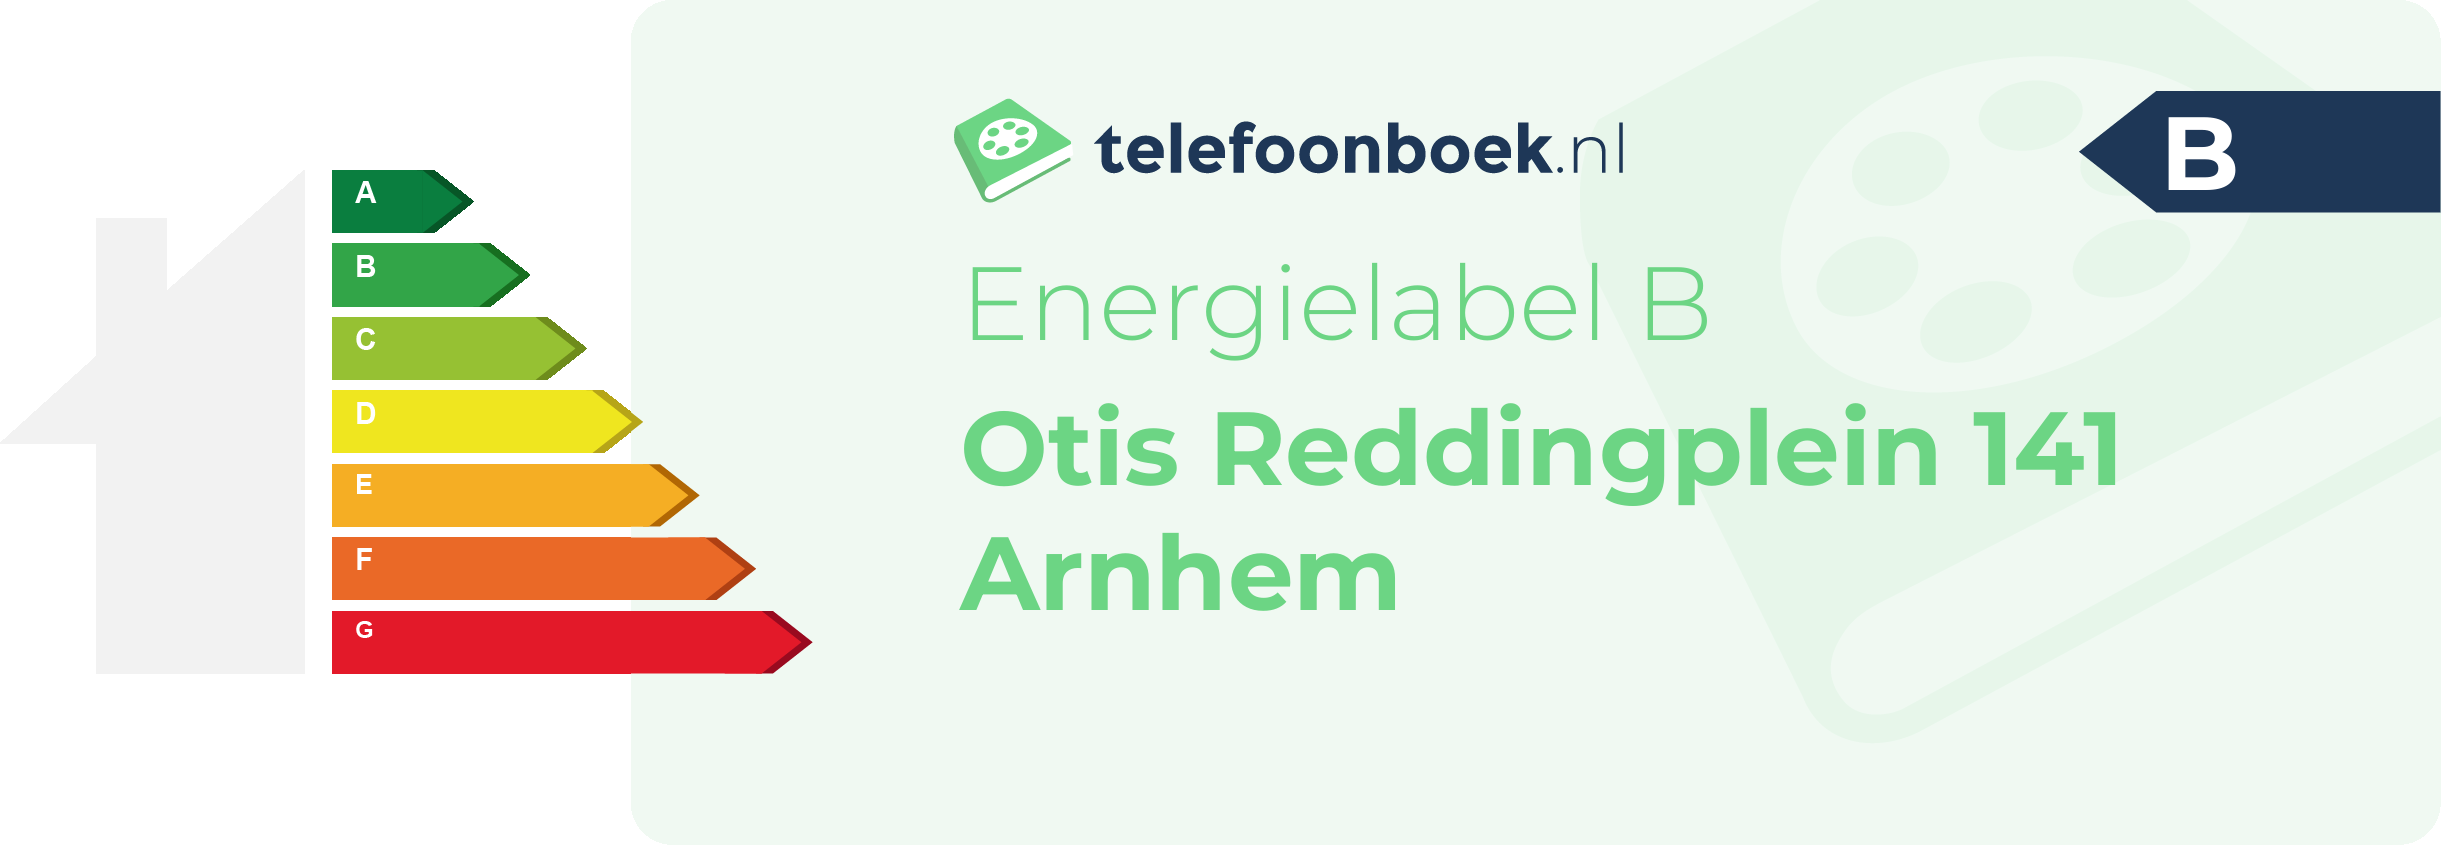 Energielabel Otis Reddingplein 141 Arnhem